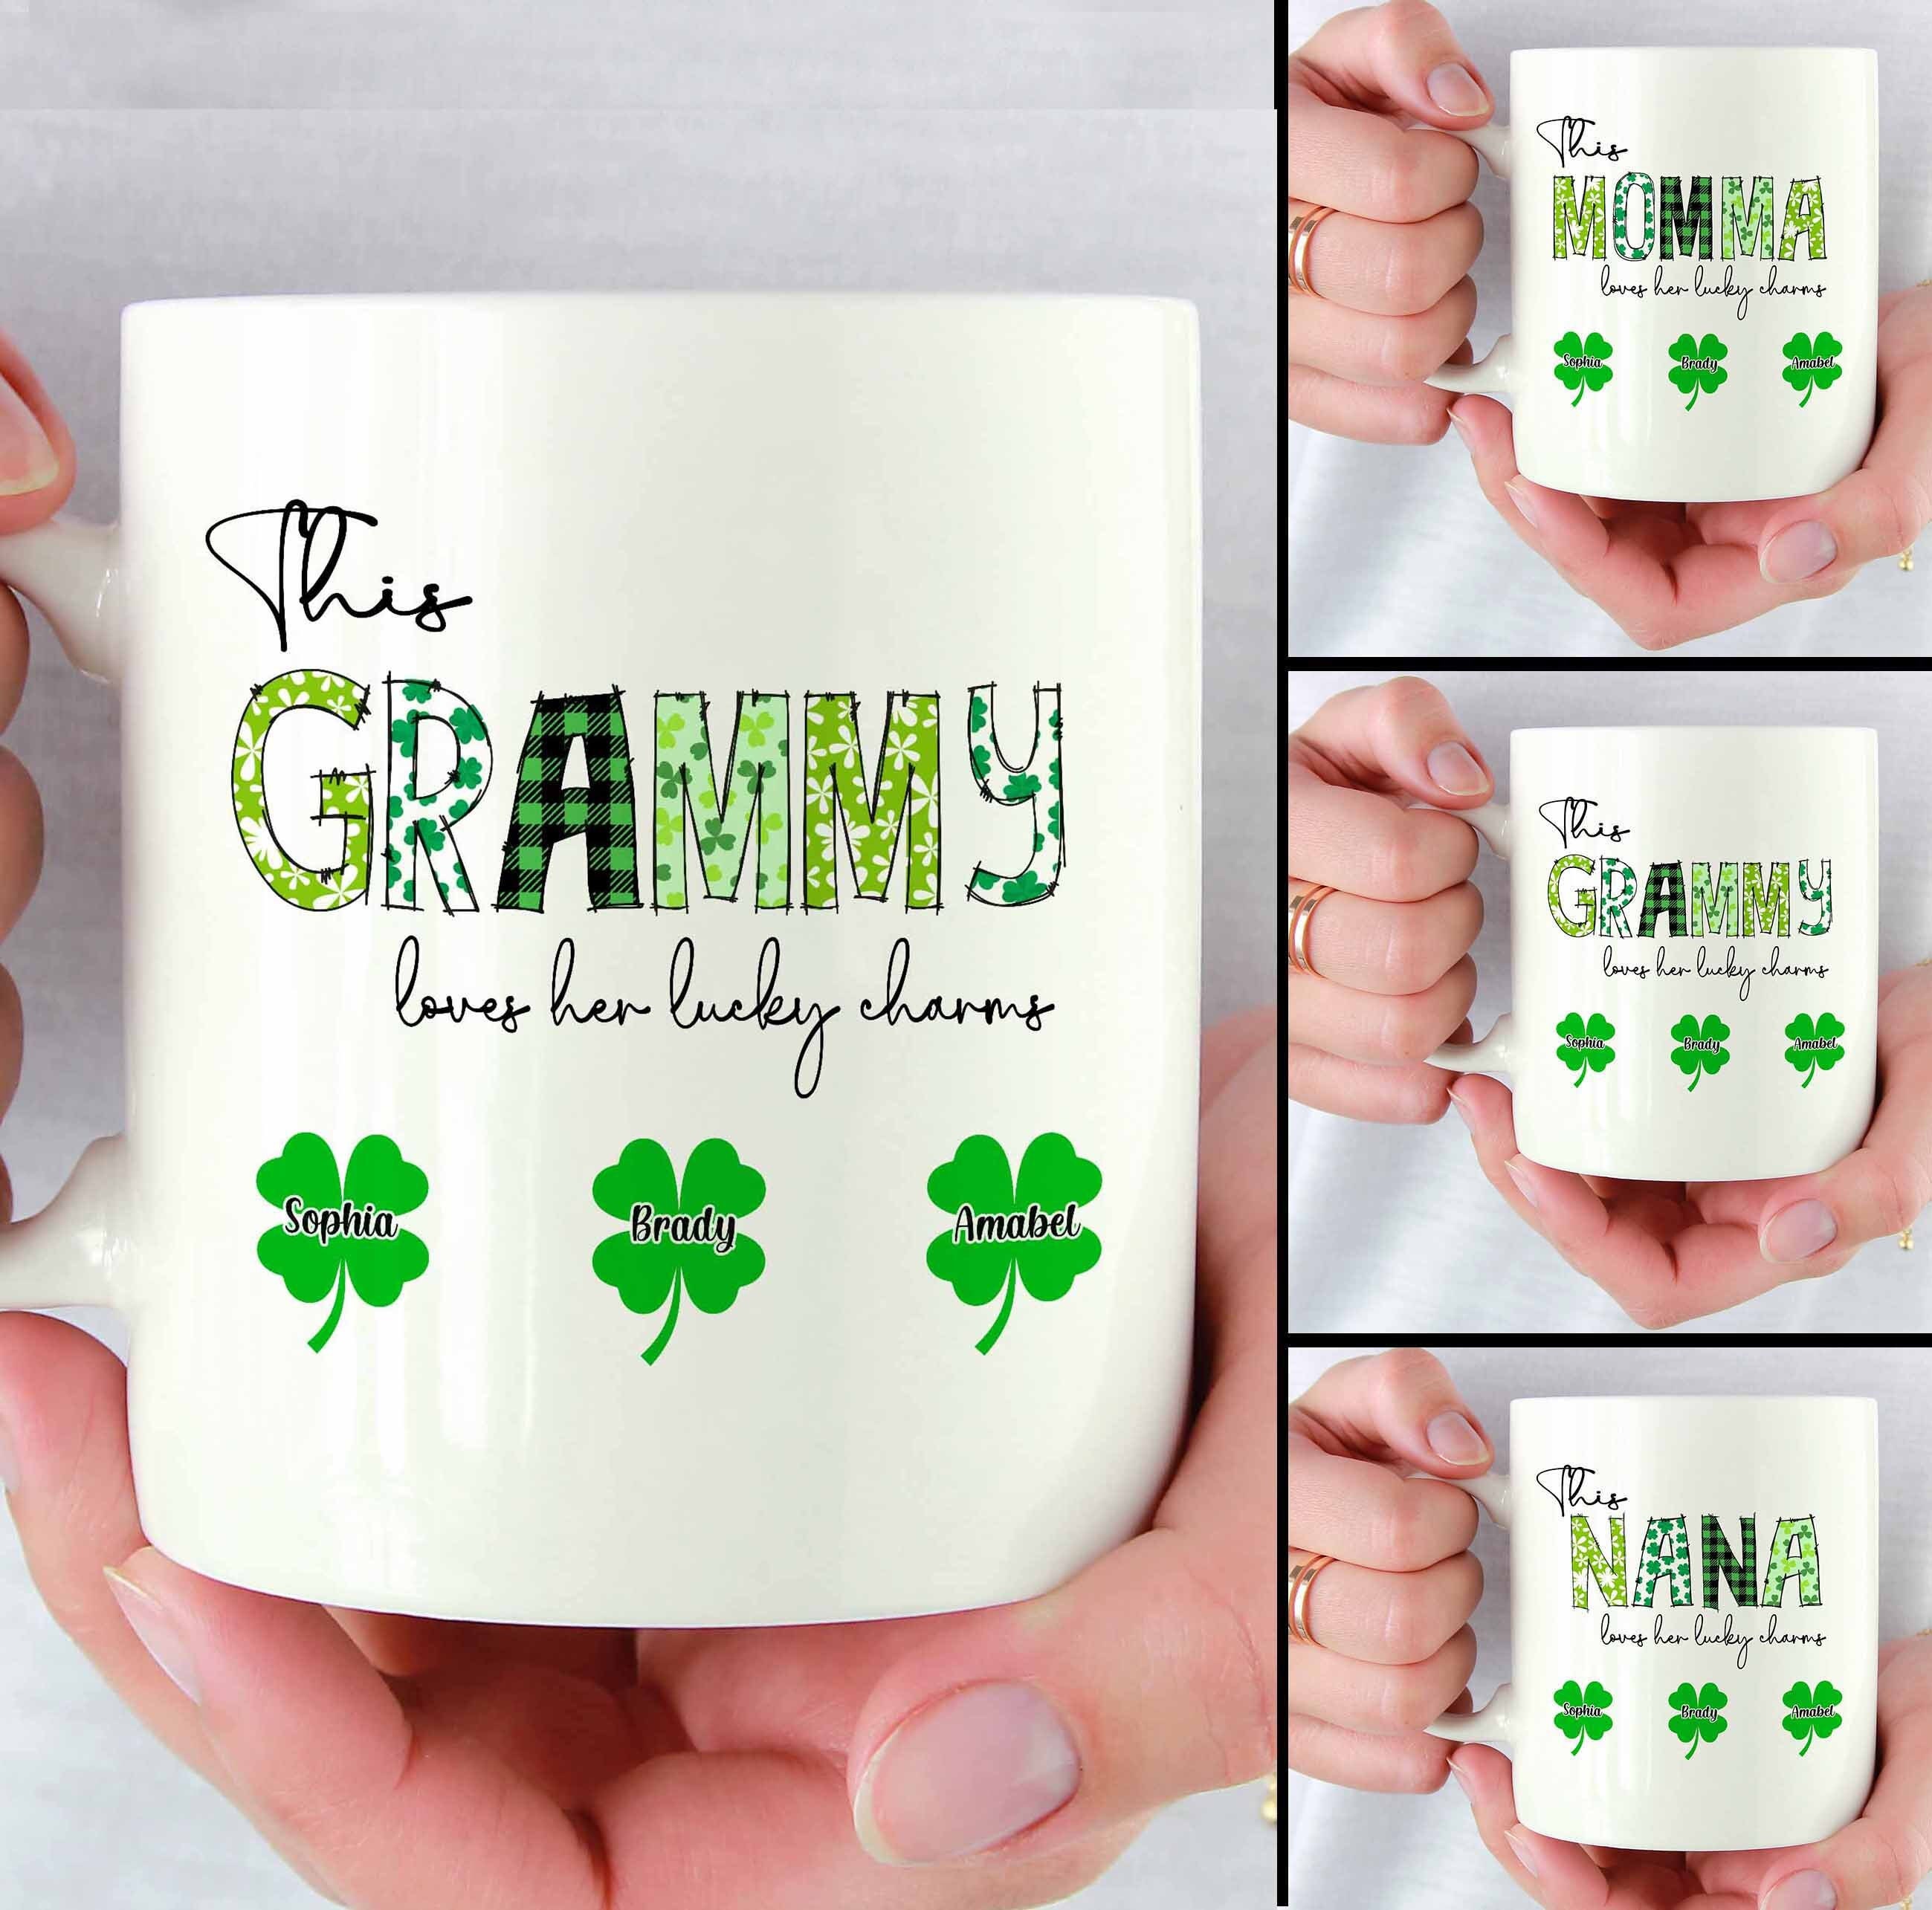 Handle Inside Mug Vintage Irish Comedy Mug Joke Coffee Tea Mug Cup Shamrock  Pattern Beige Green Funny Cup 